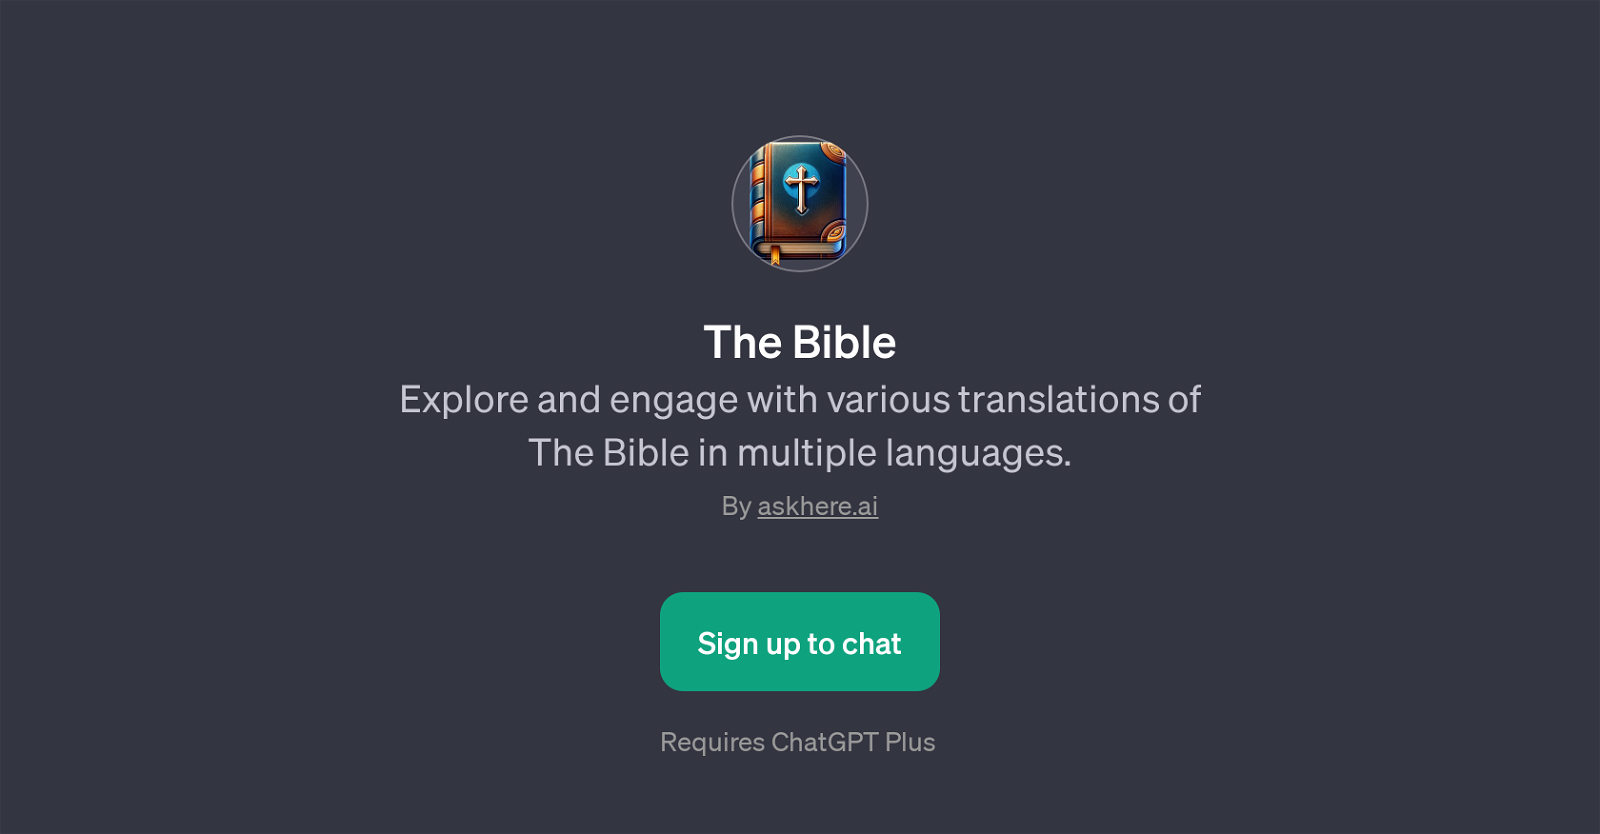 The Bible website